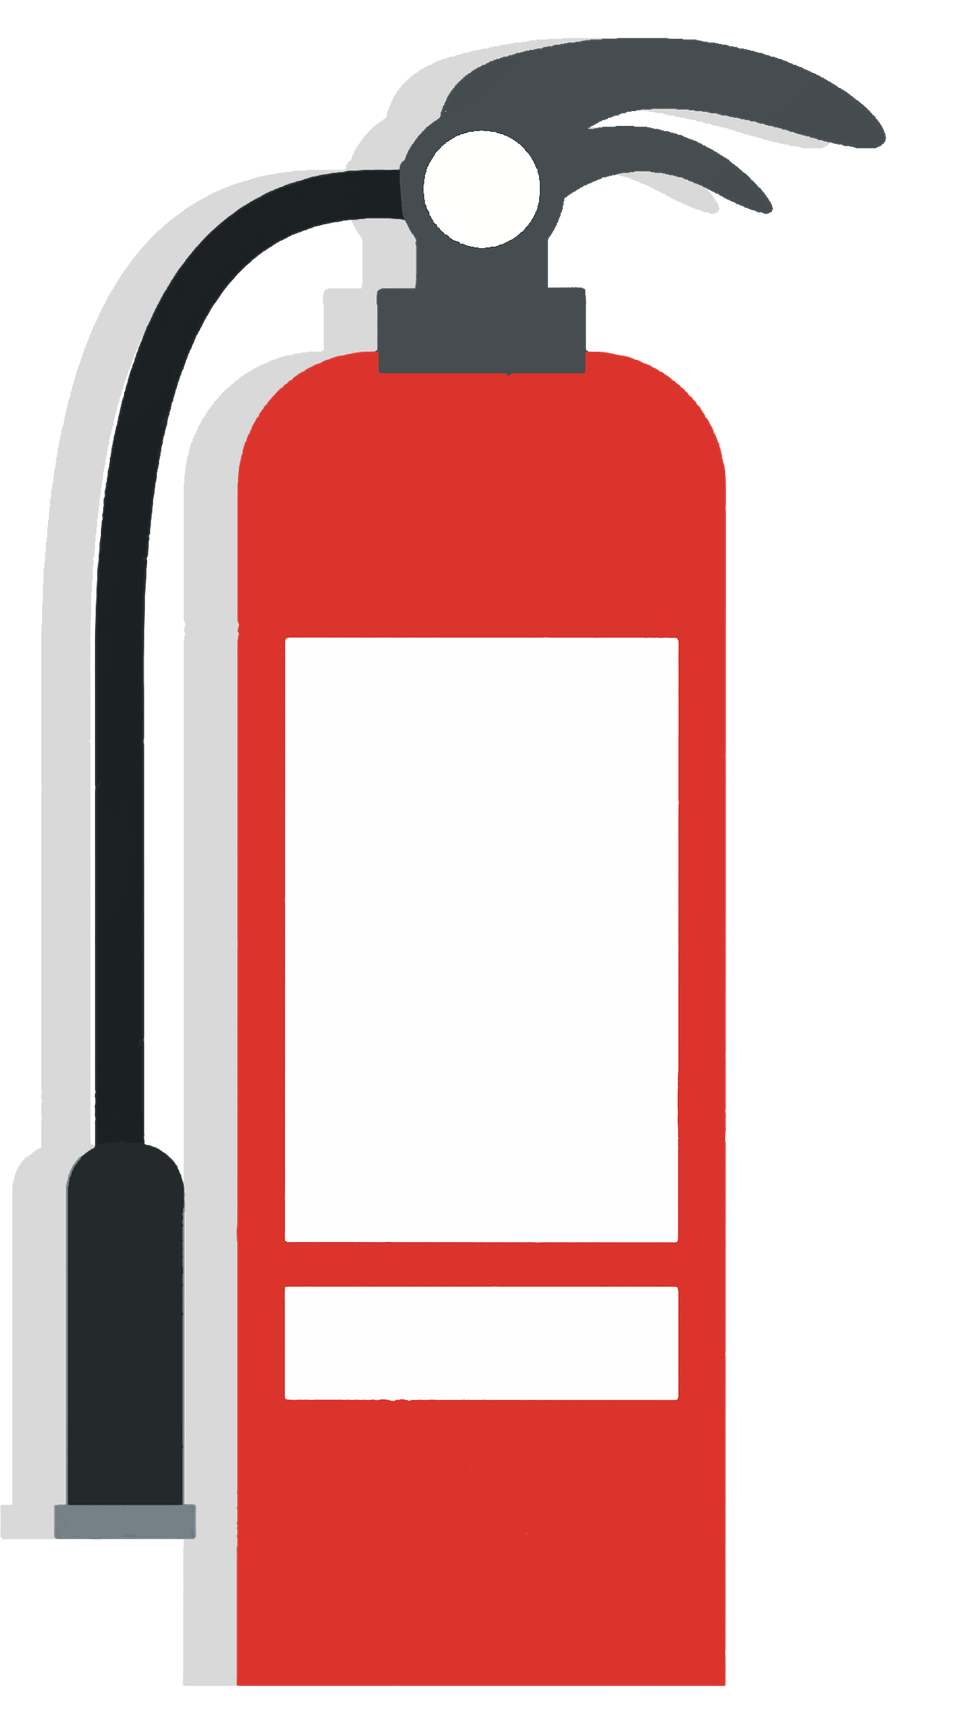 Extinguisher Background PNG